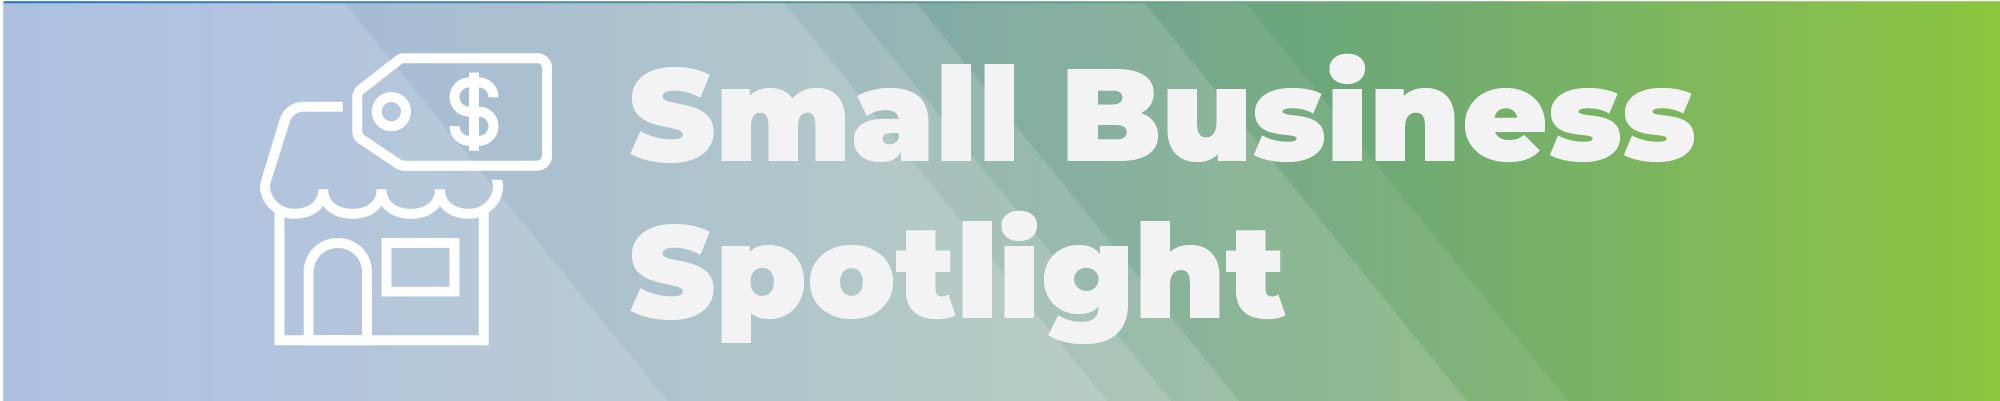 Spotlight on small business